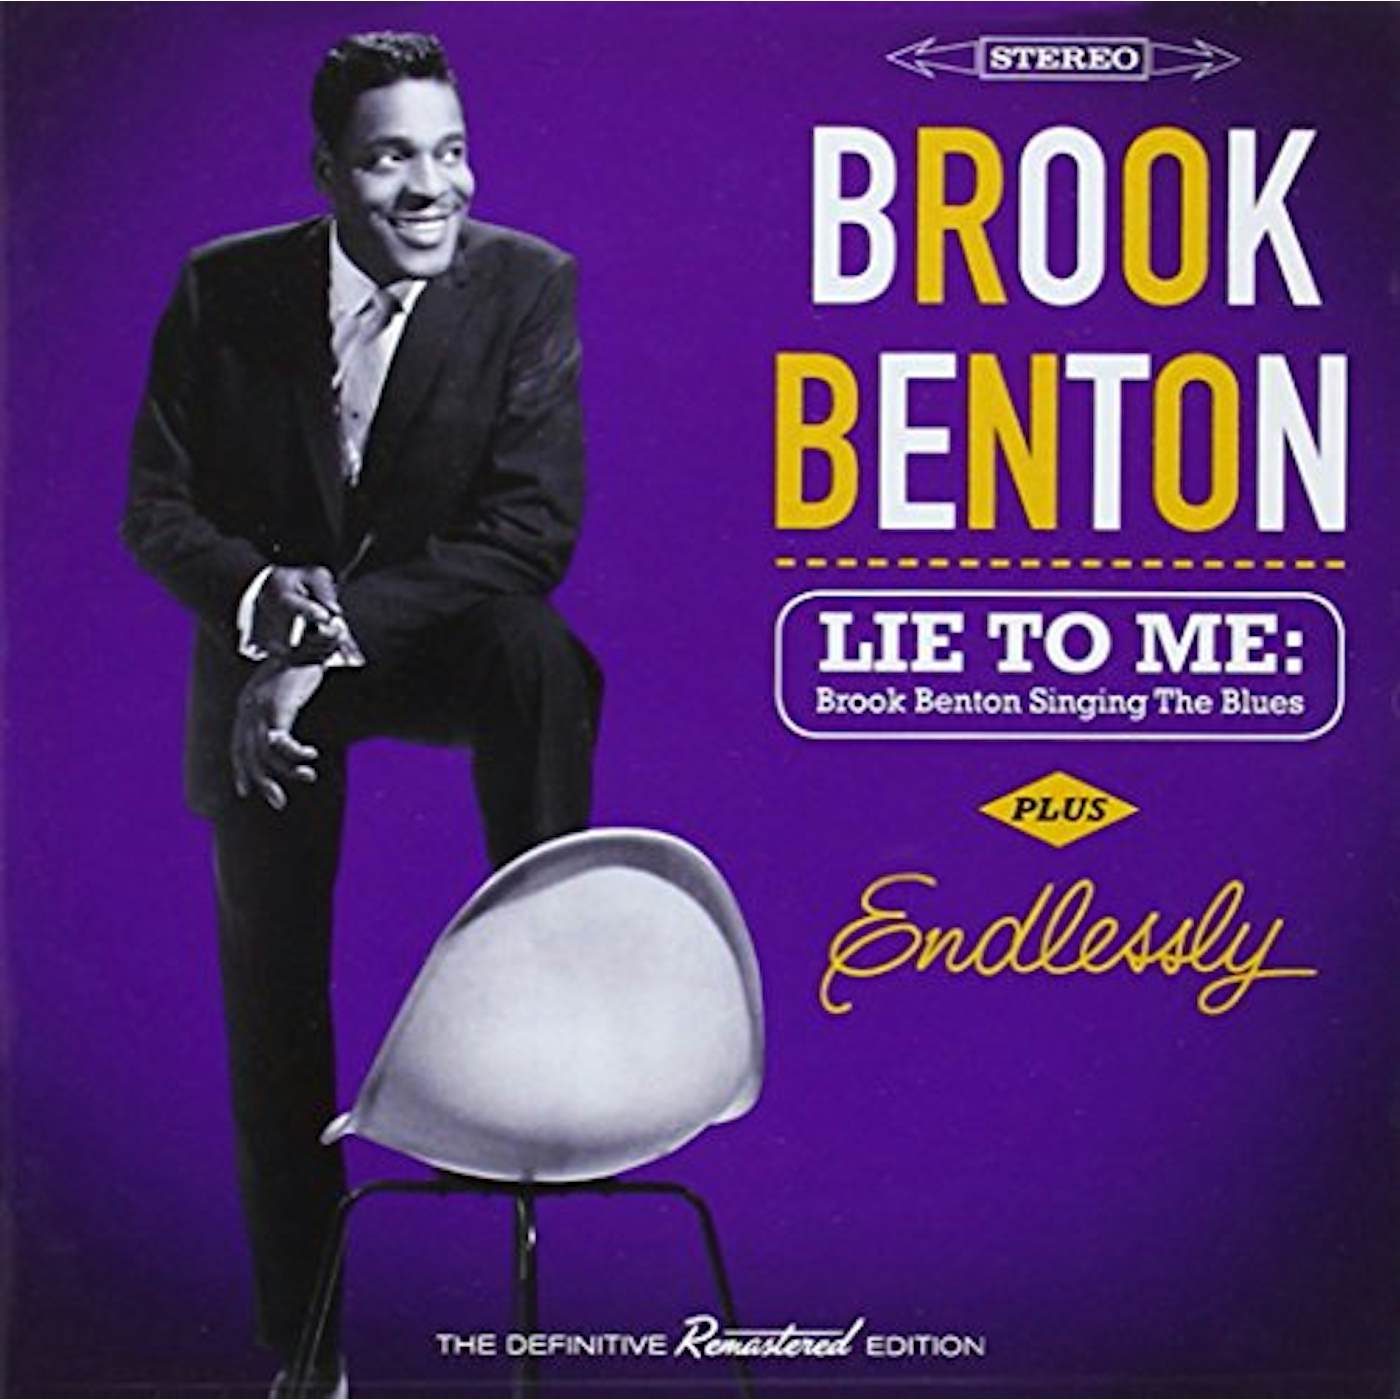 LIE TO ME: BROOK BENTON SINGING THE BLUES CD